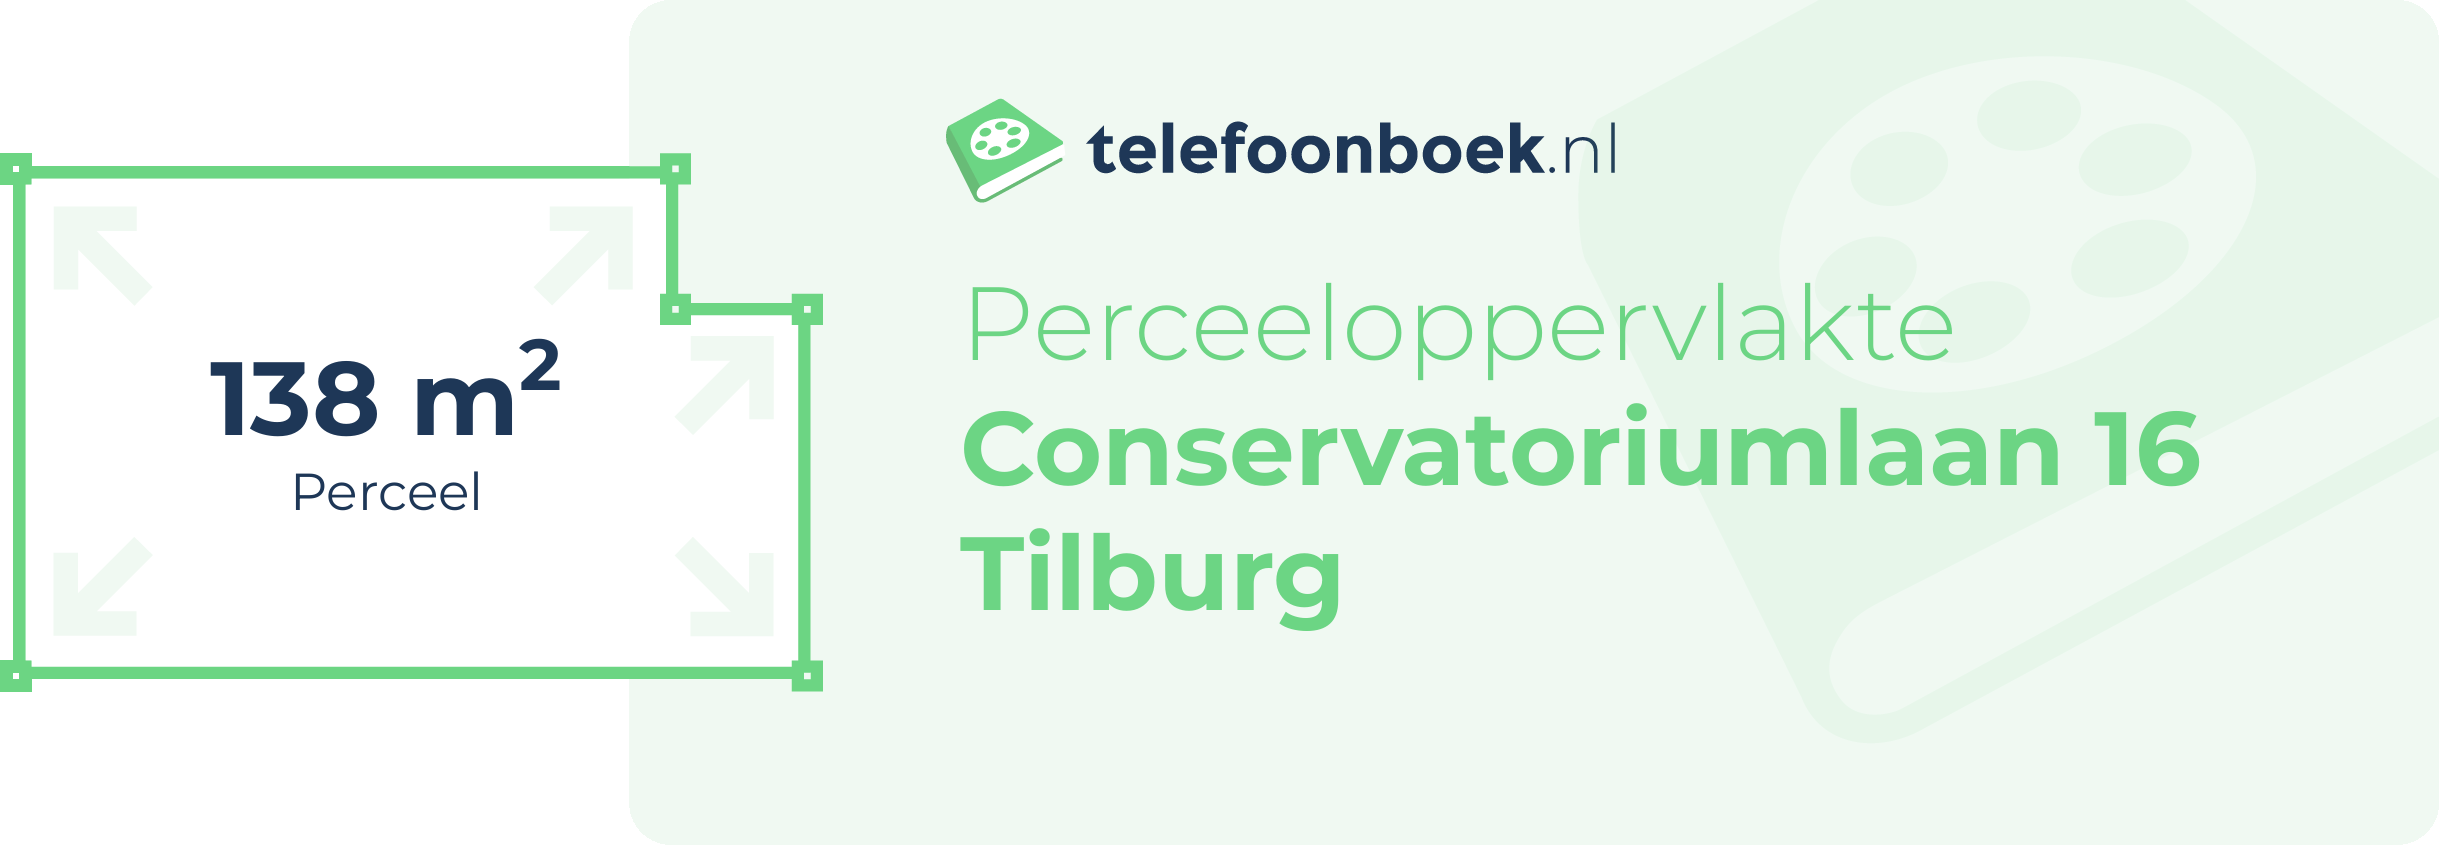 Perceeloppervlakte Conservatoriumlaan 16 Tilburg